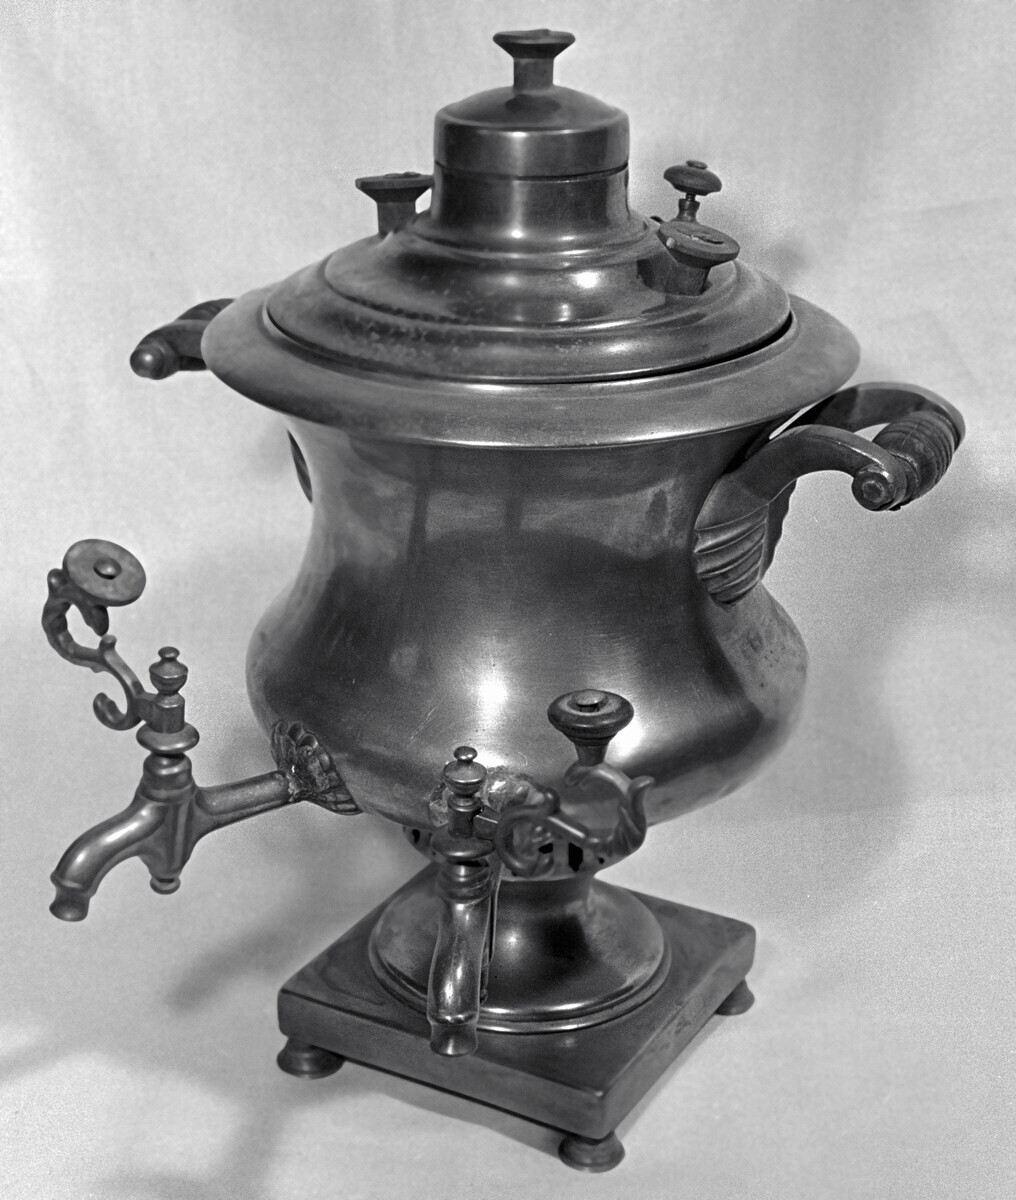 Sebuah samovar dengan dua keran untuk teh dan kopi yang dibuat pada awal abad ke-19.